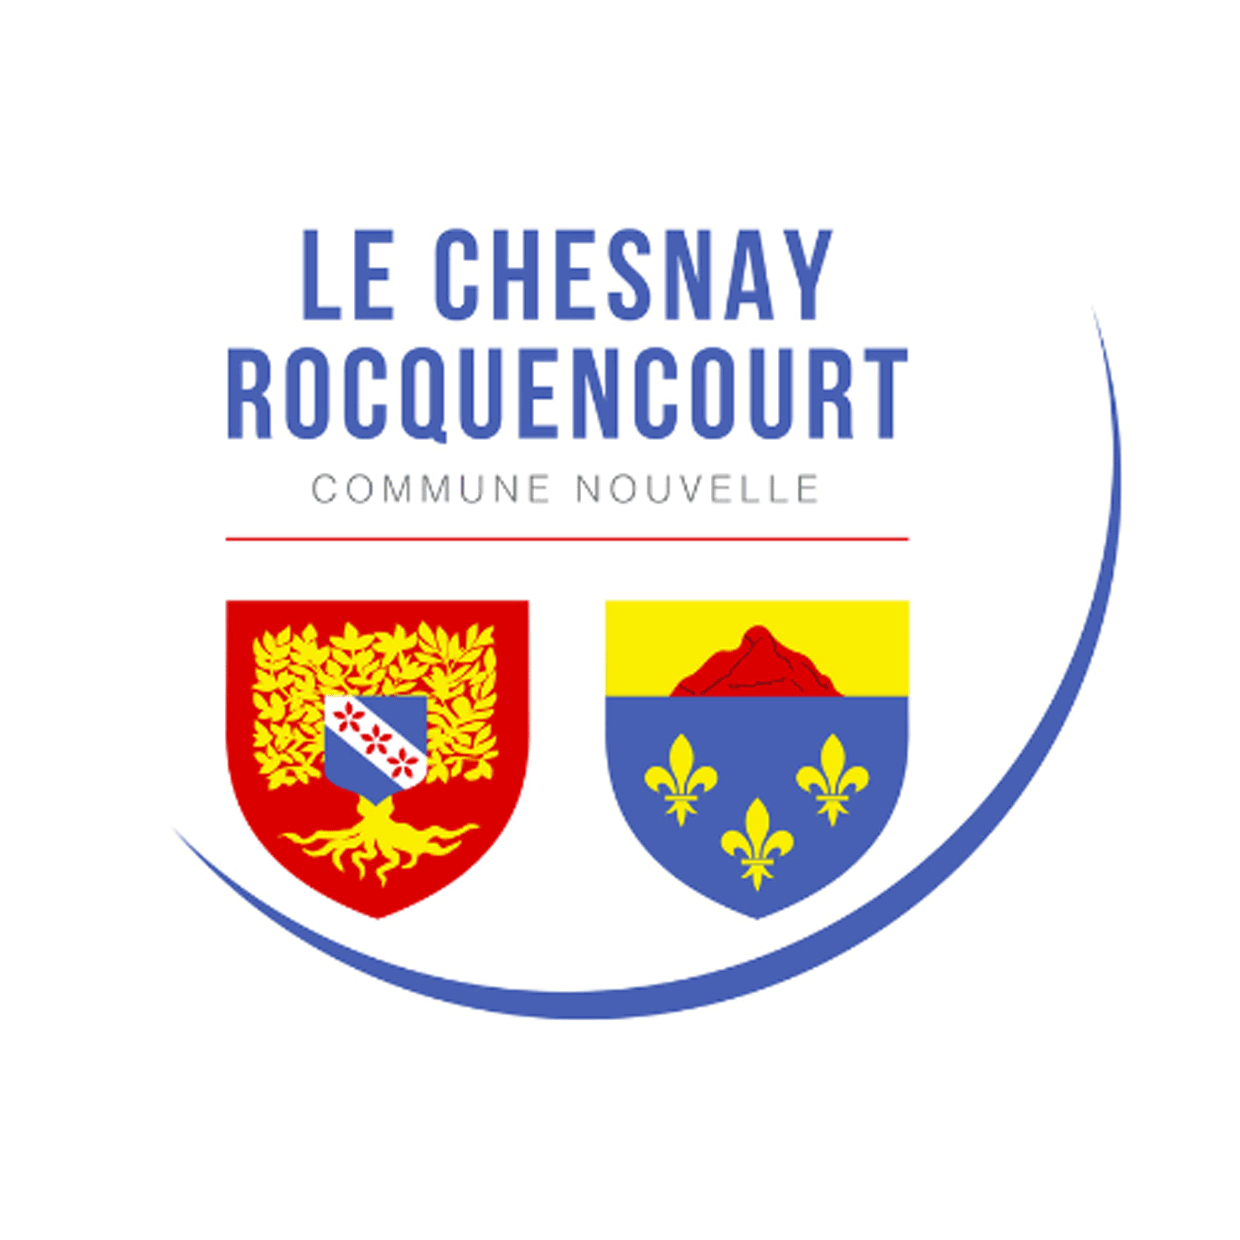 Le Chesnay Rocquencourt - Logo